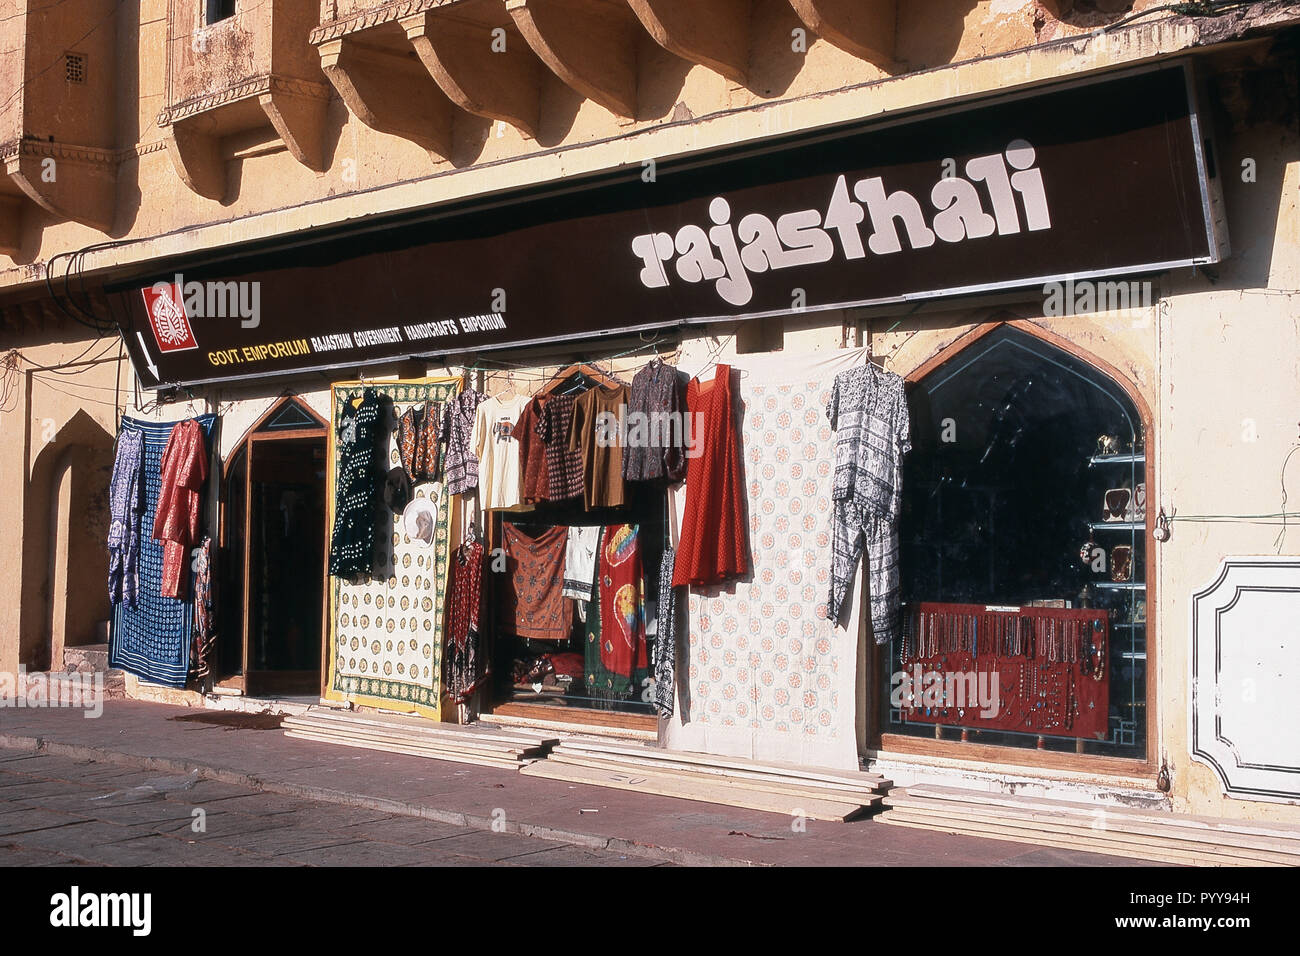 Rajasthali Rajasthan Gobierno tienda de artesanía, Amer Fort, Jaipur, Rajasthan, India, Asia Foto de stock